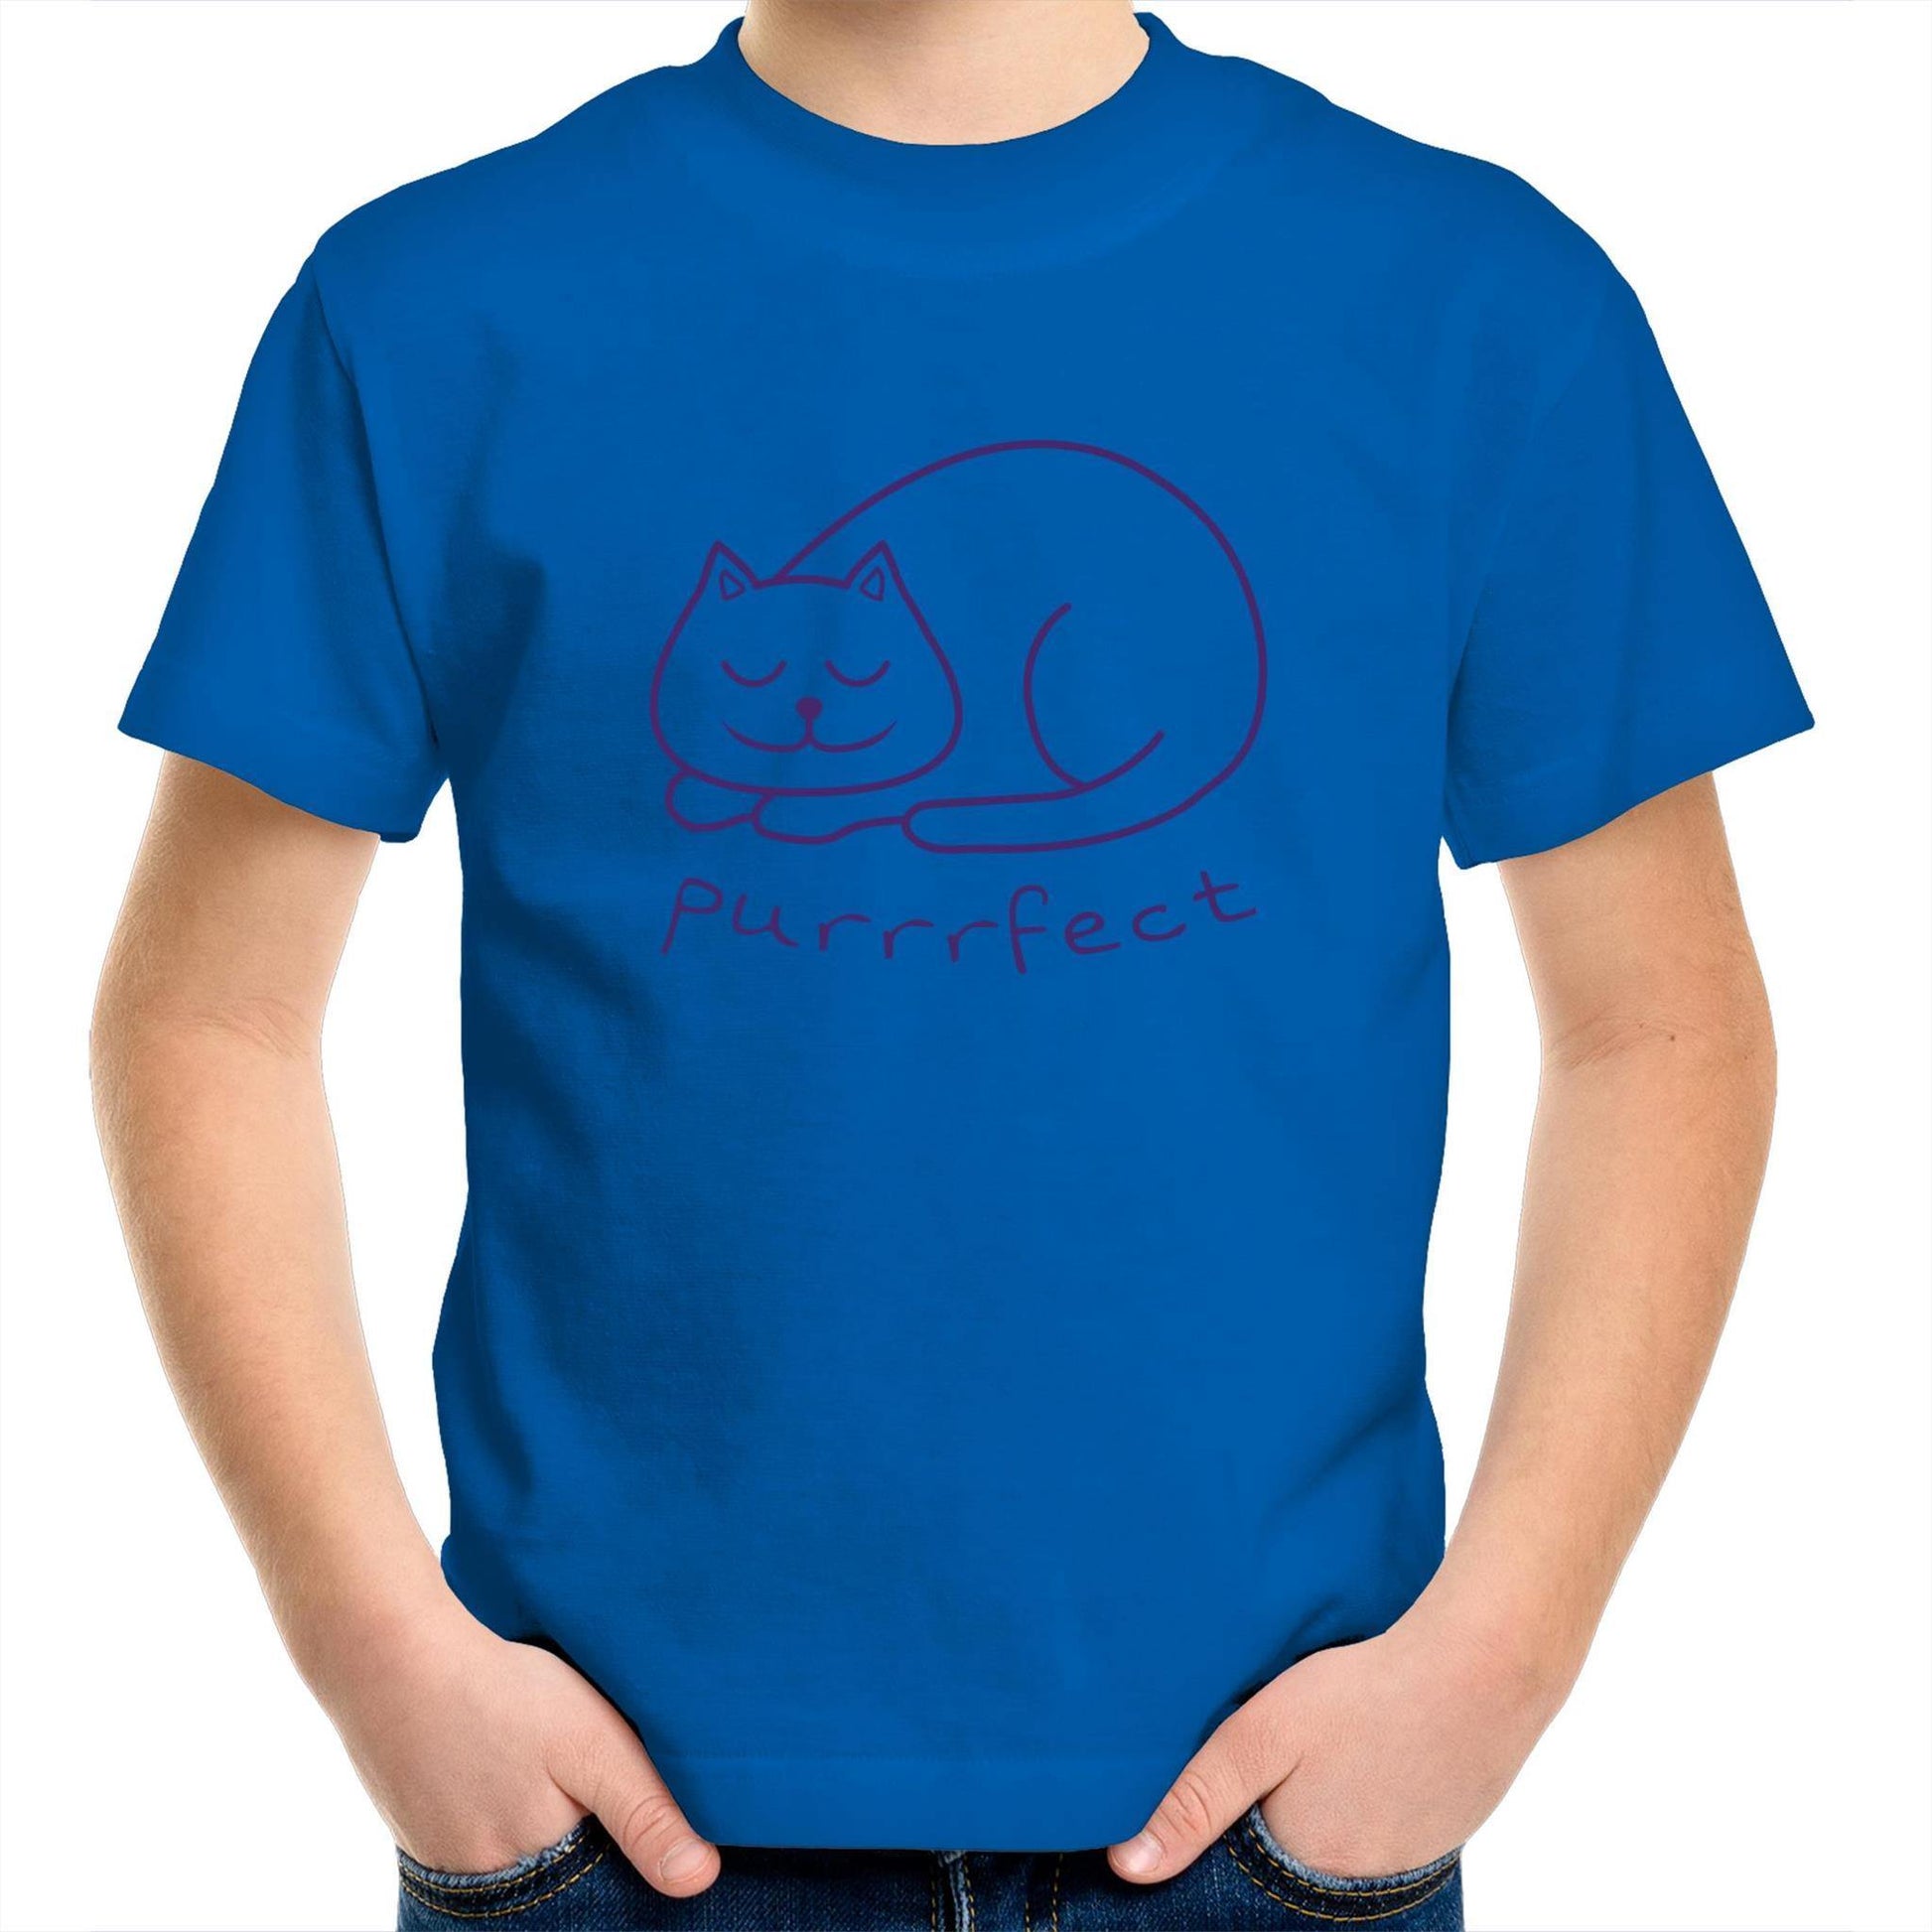 Purrrfect - Kids Youth Crew T-Shirt Bright Royal Kids Youth T-shirt animal